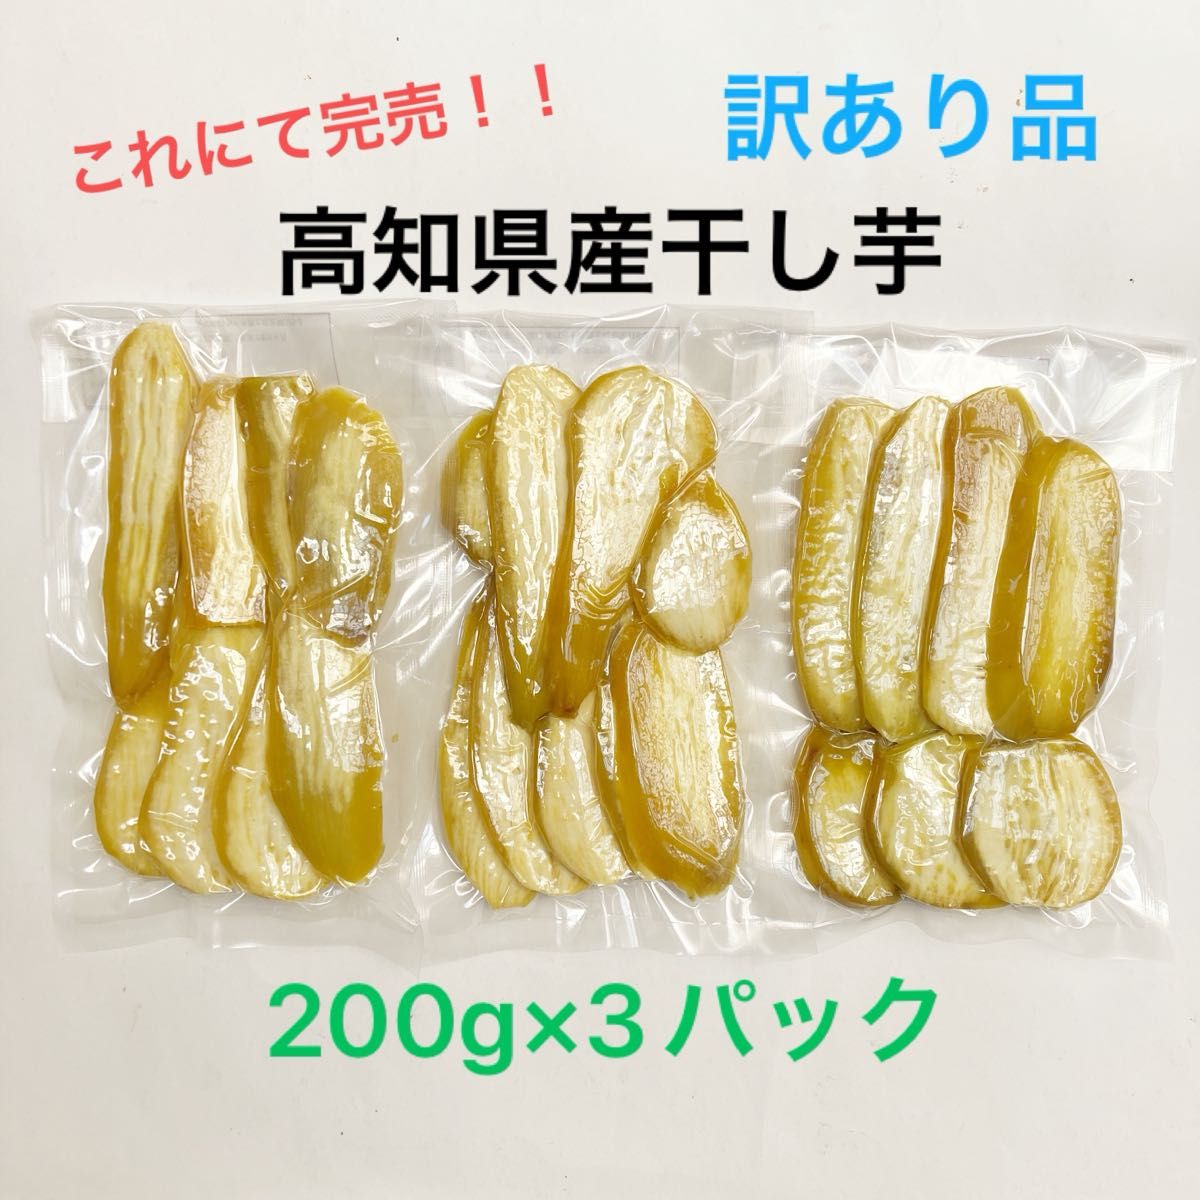 【B品】高知県産干し芋(200g×3パック)